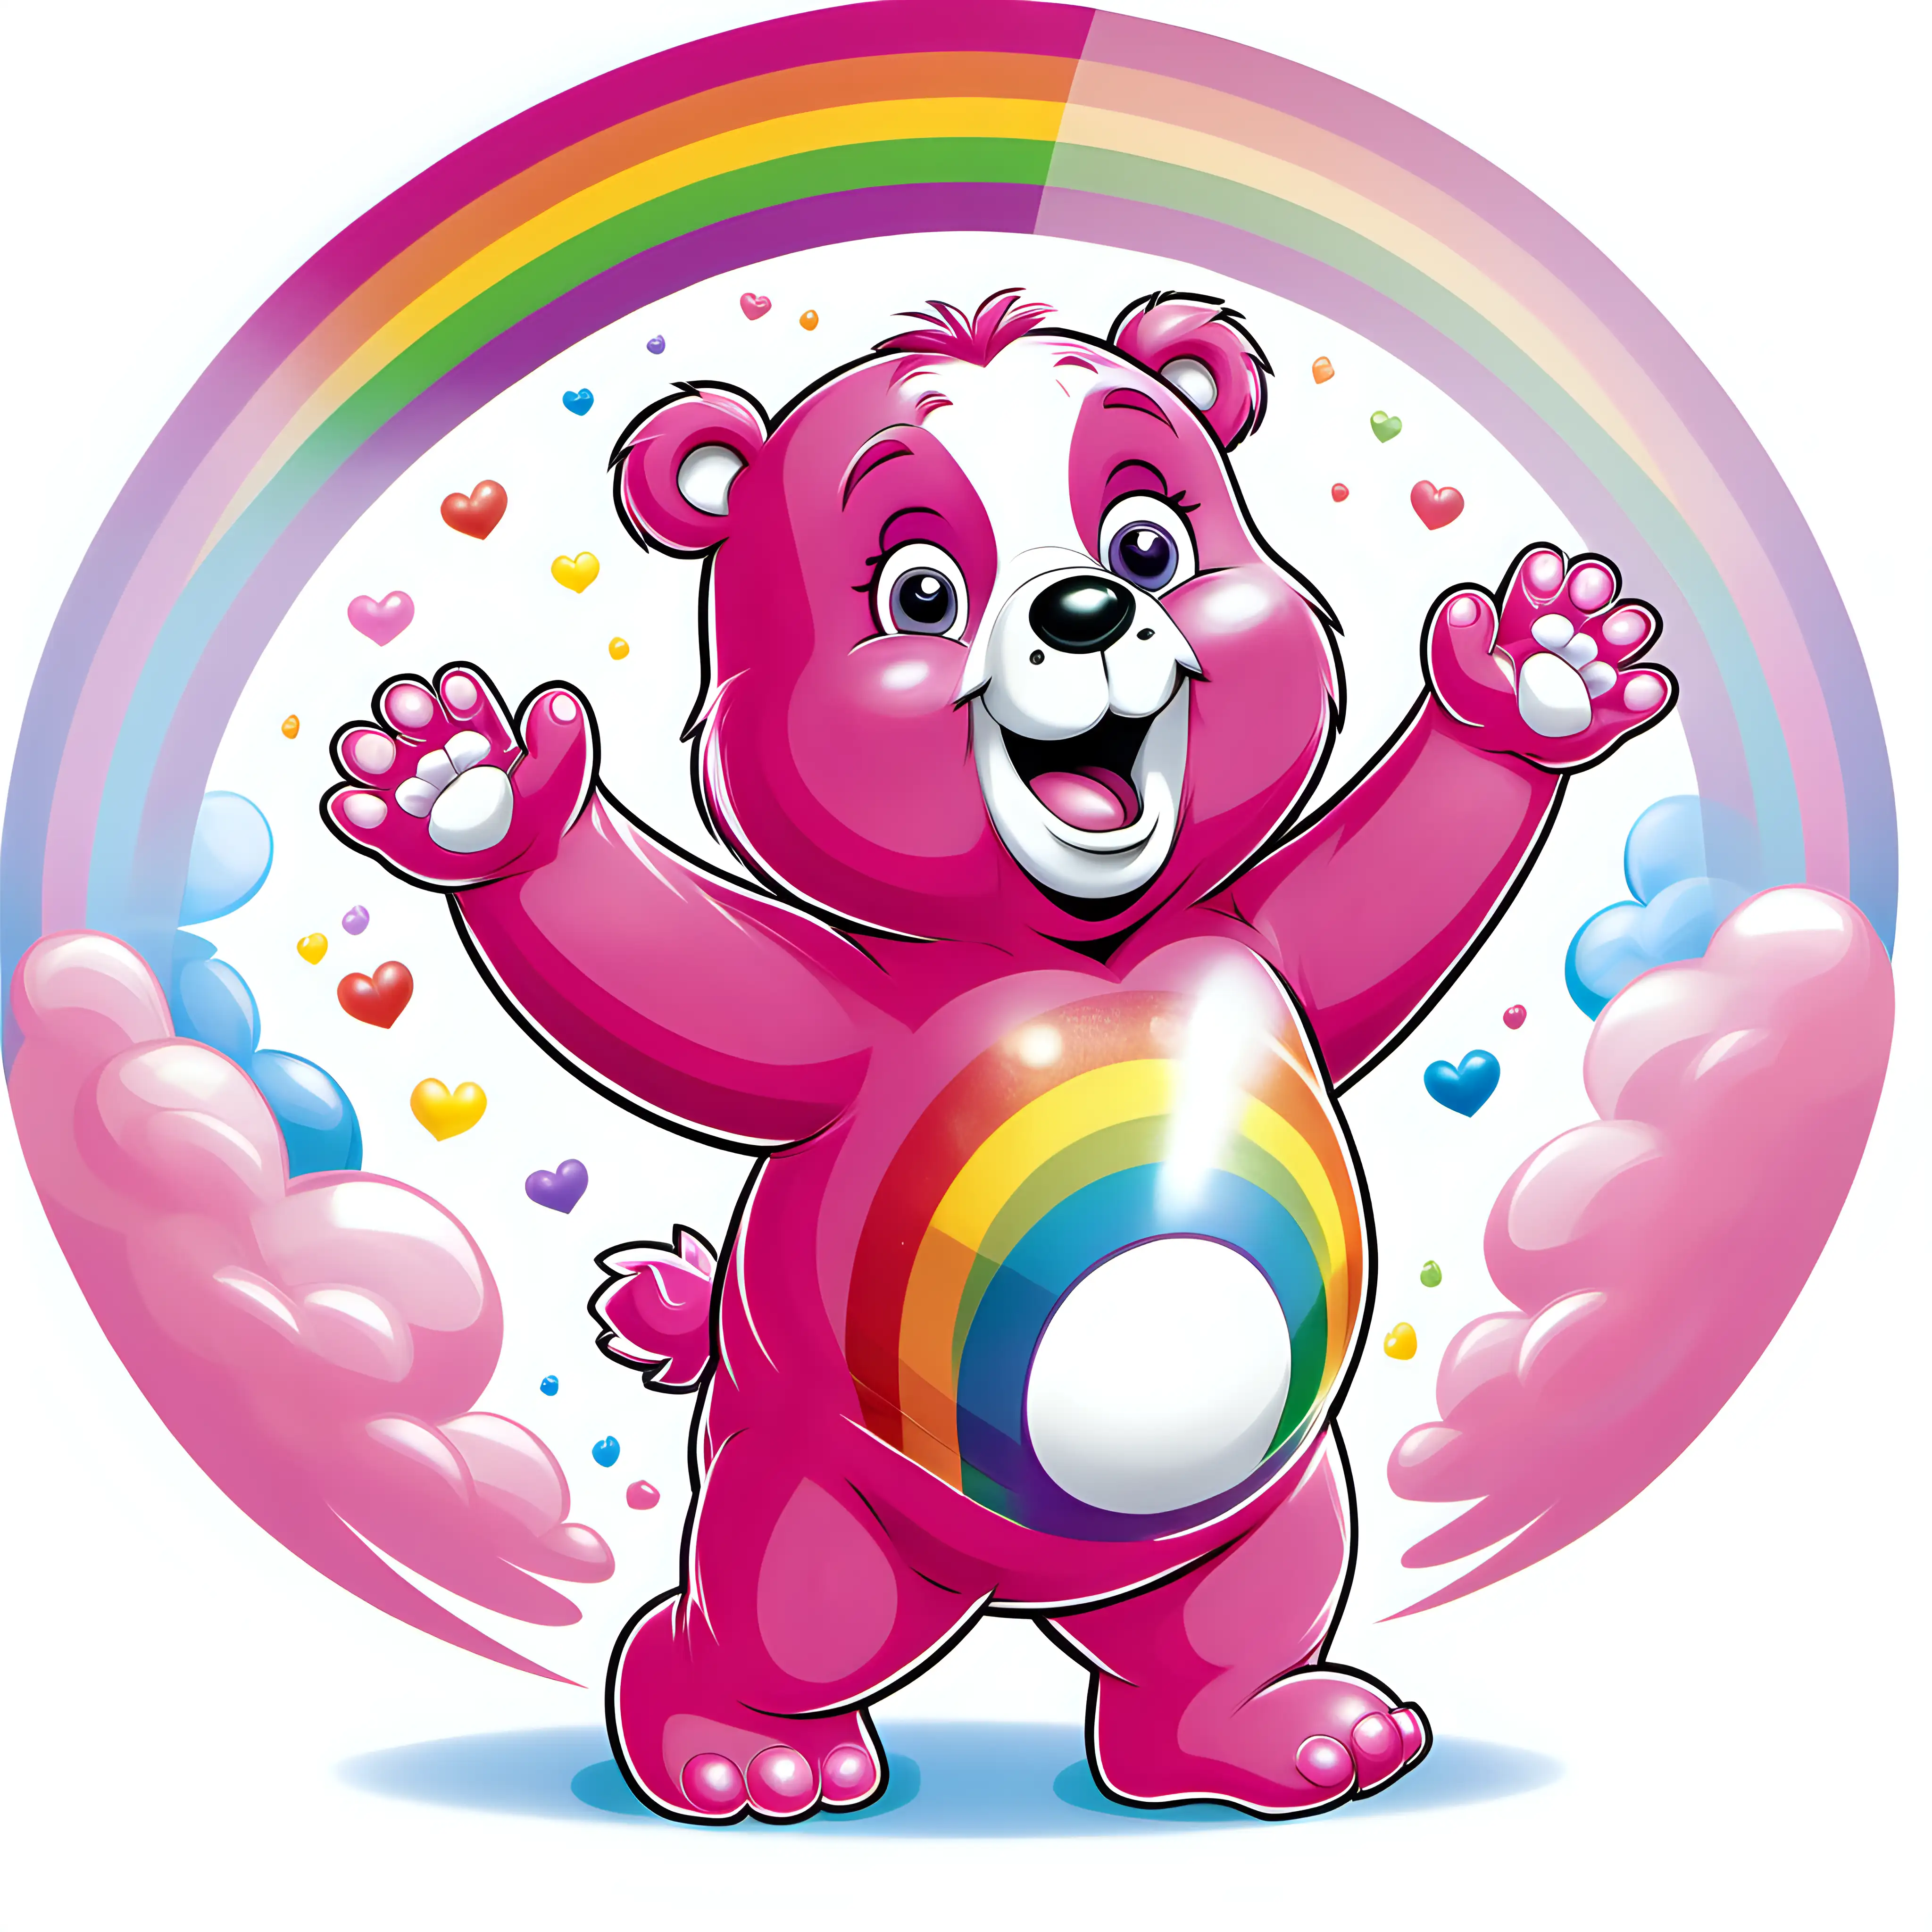 Joyful Pink Cheer Bear Cartoon Illustration with Rainbow Belly